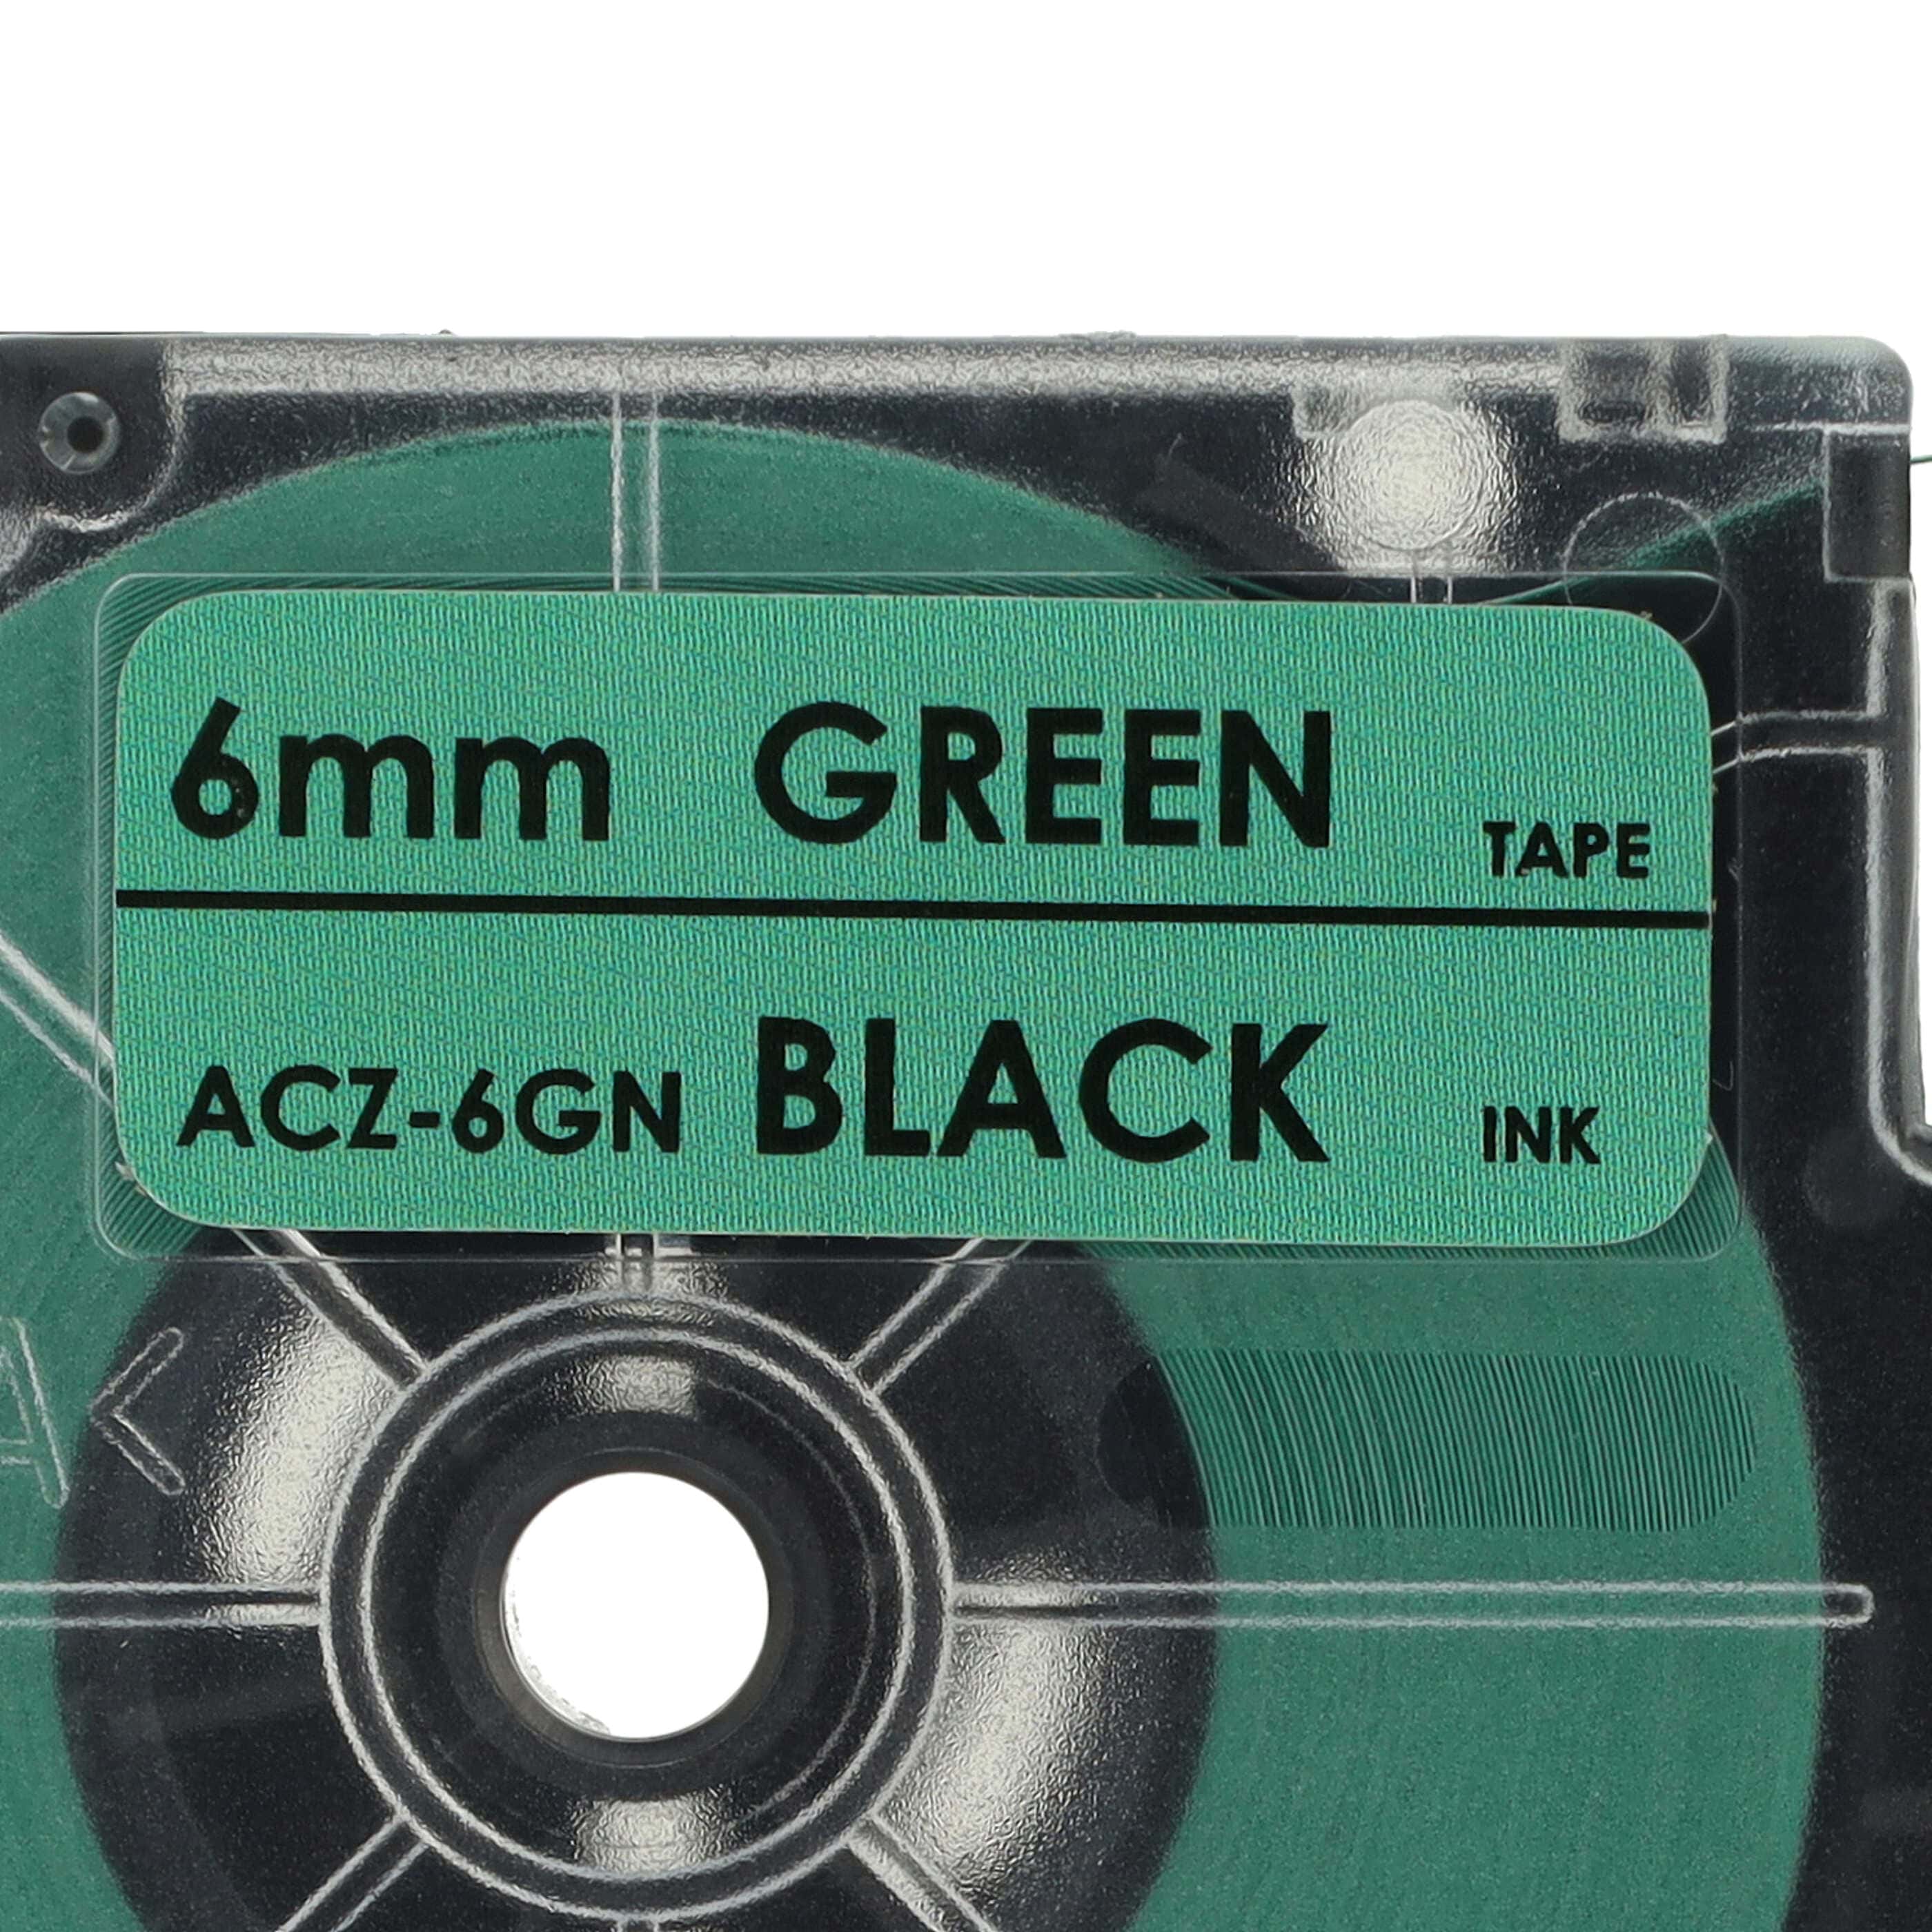 Casete cinta escritura reemplaza Casio XR-6GN, XR-6GN1 Negro su Verde